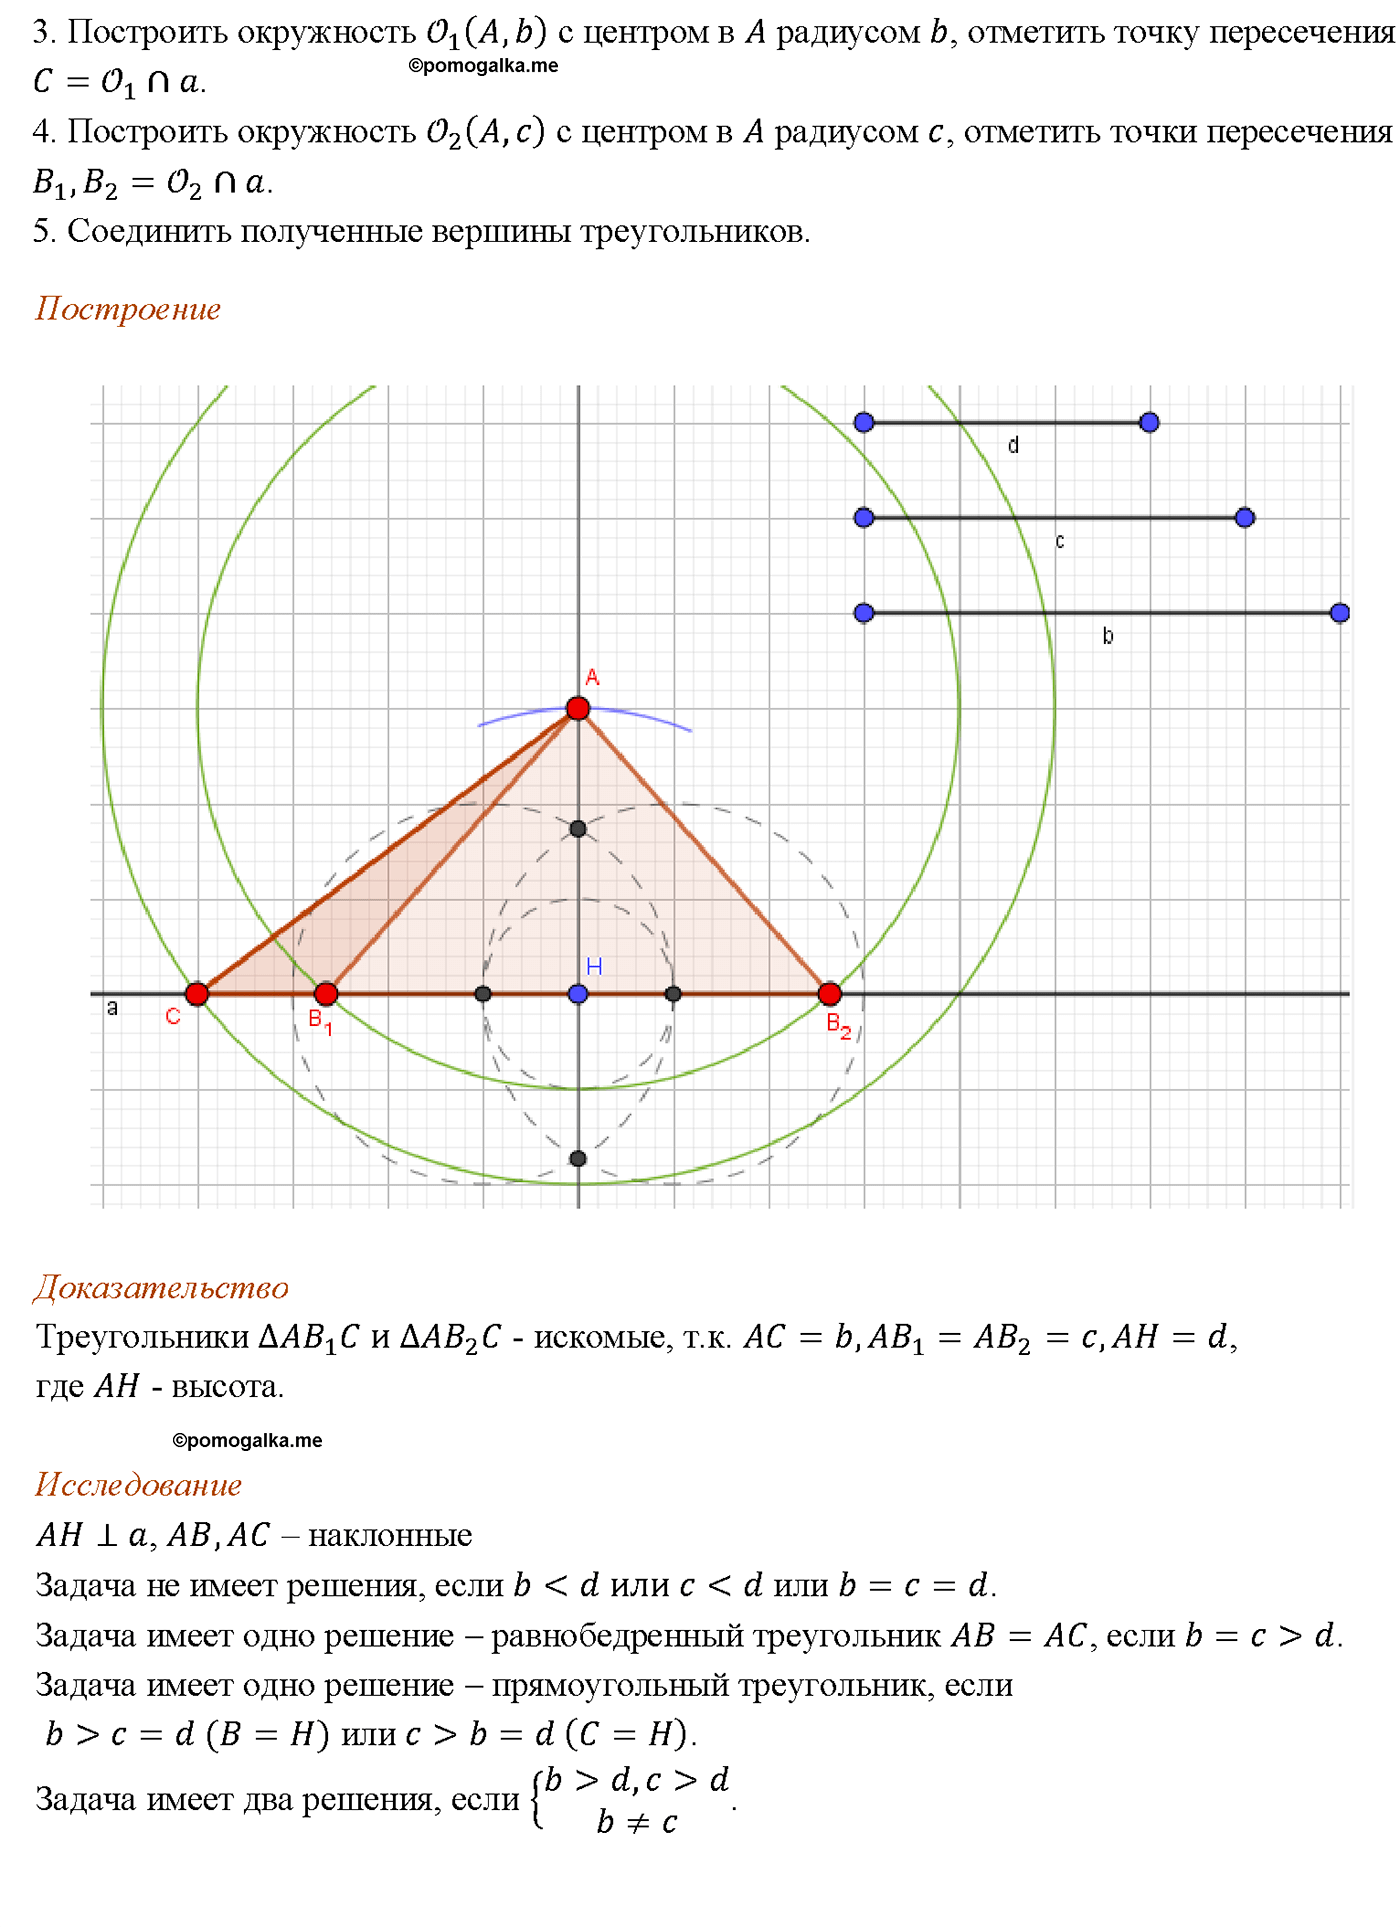 страница 94 номер 351 геометрия 7-9 класс Атанасян учебник 2014 год